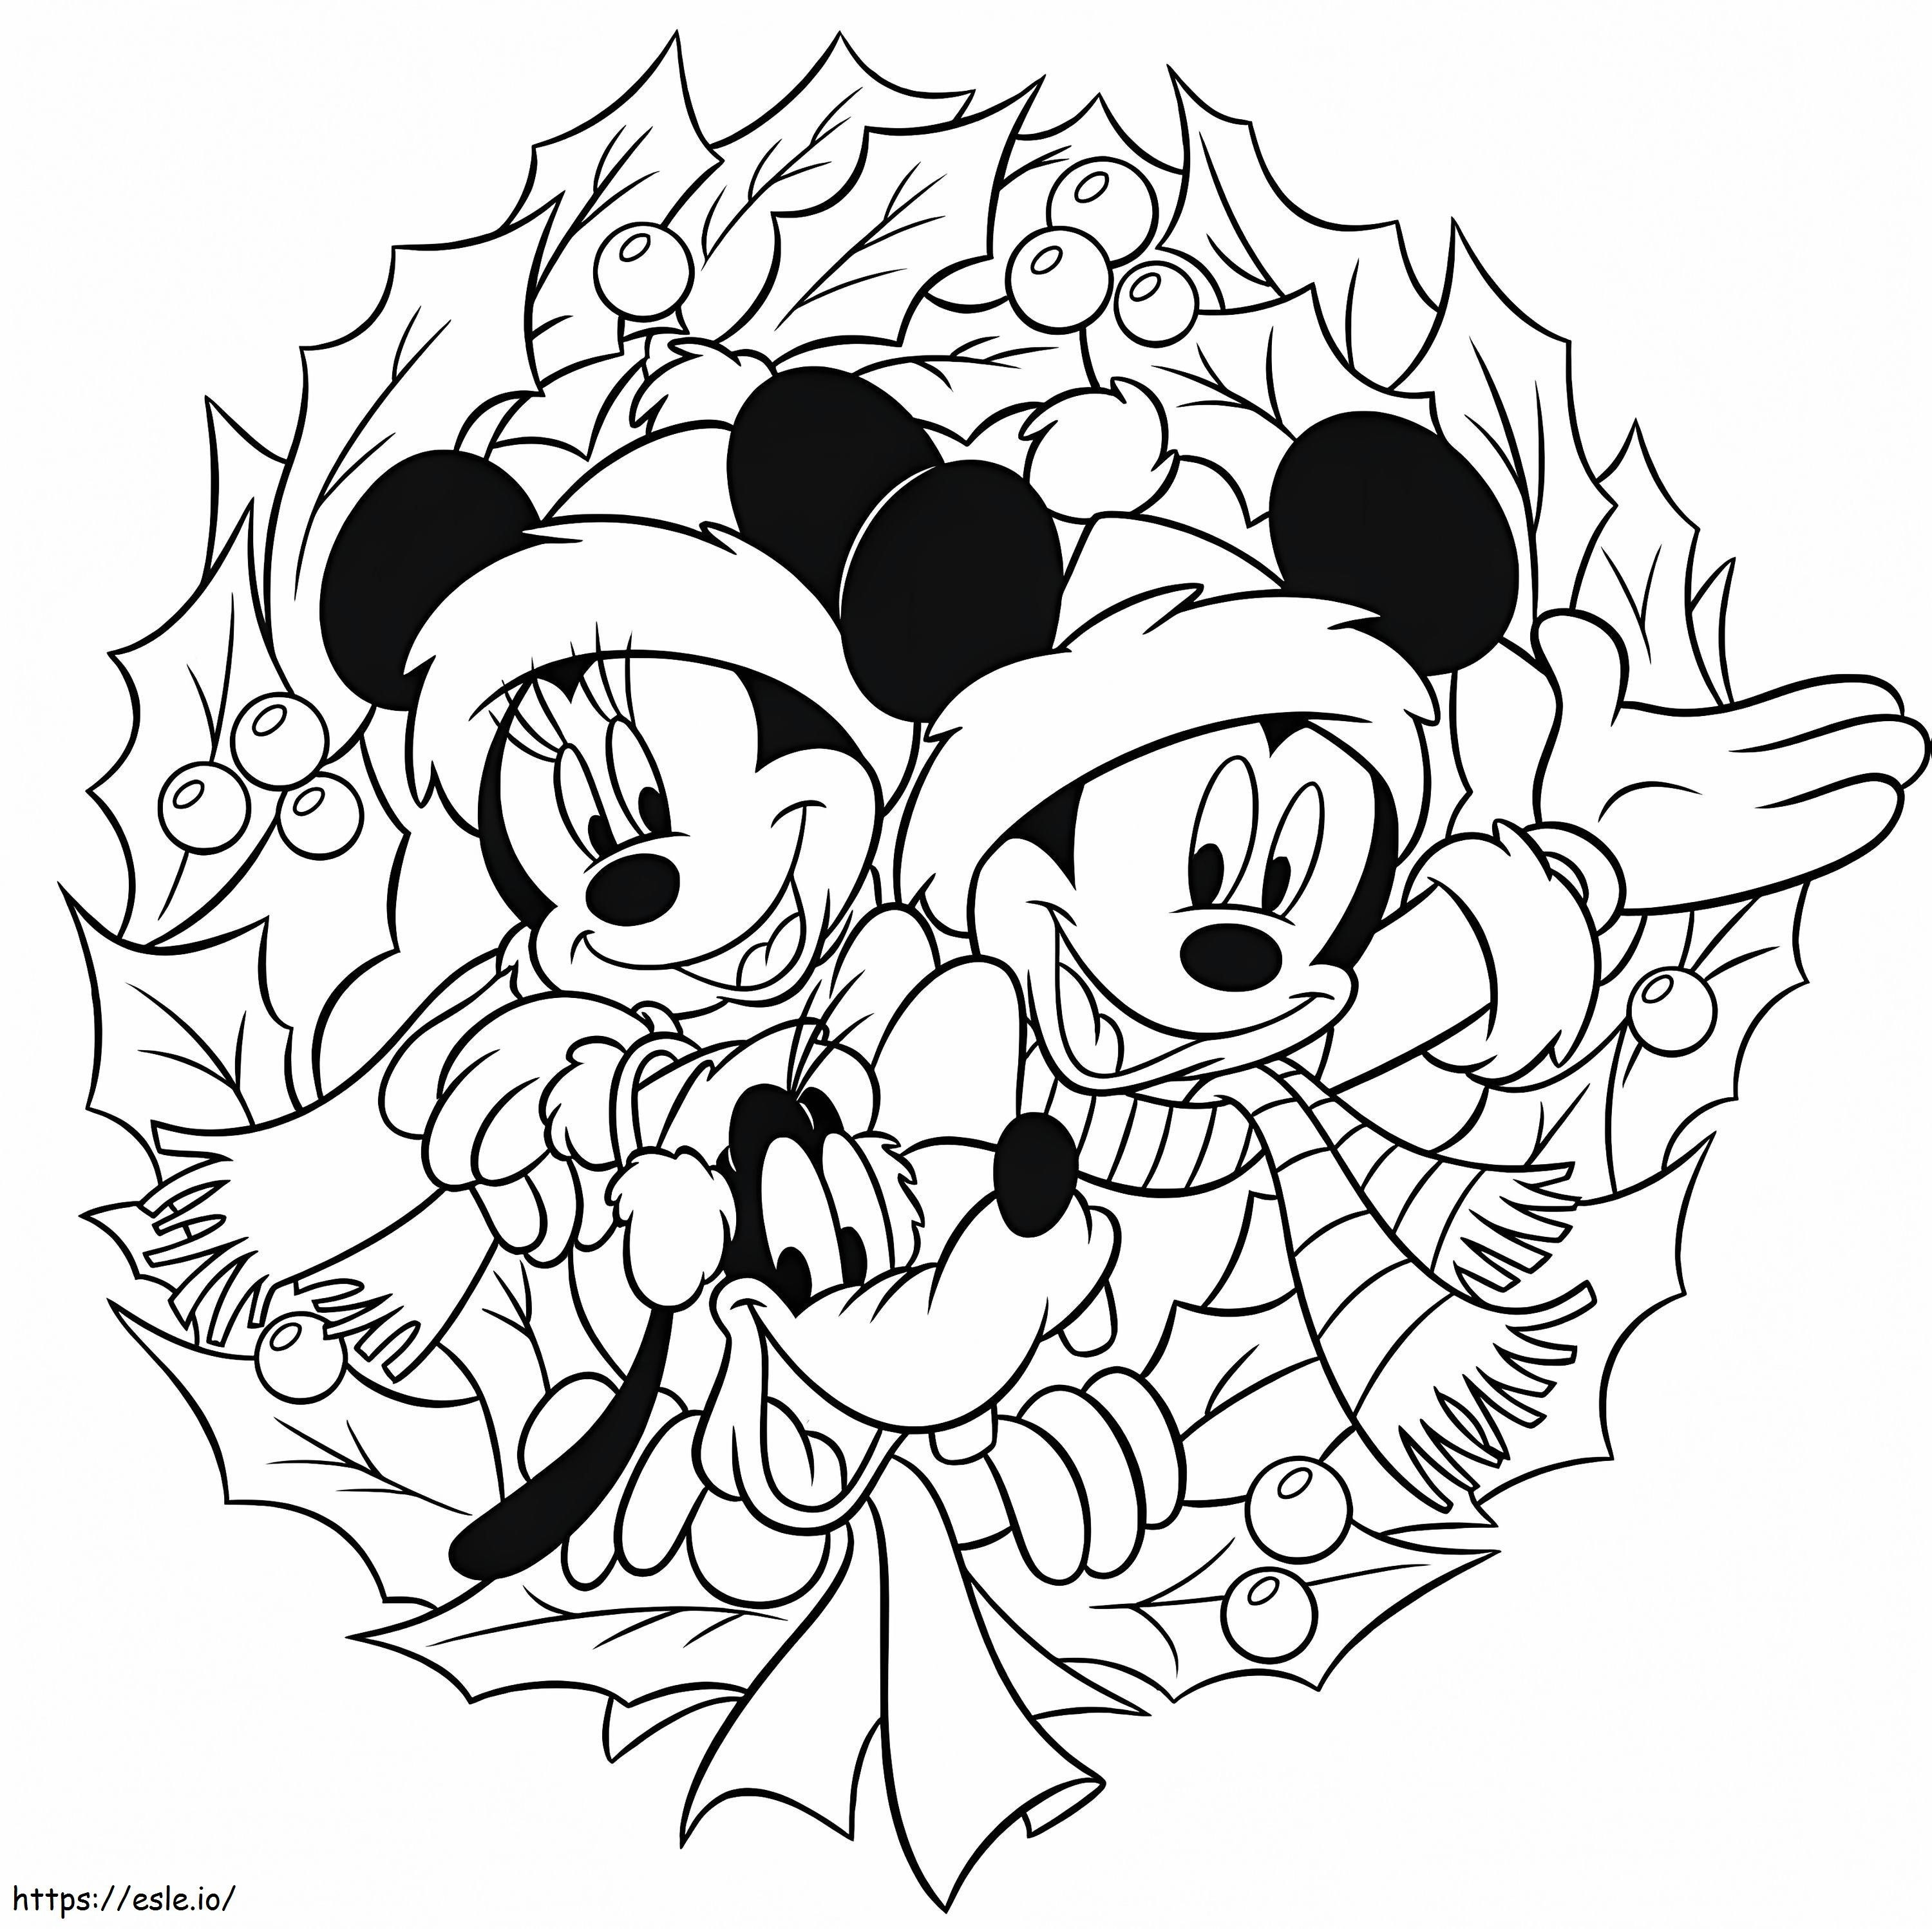 Coloriage Imprimer Disney Noël à imprimer dessin